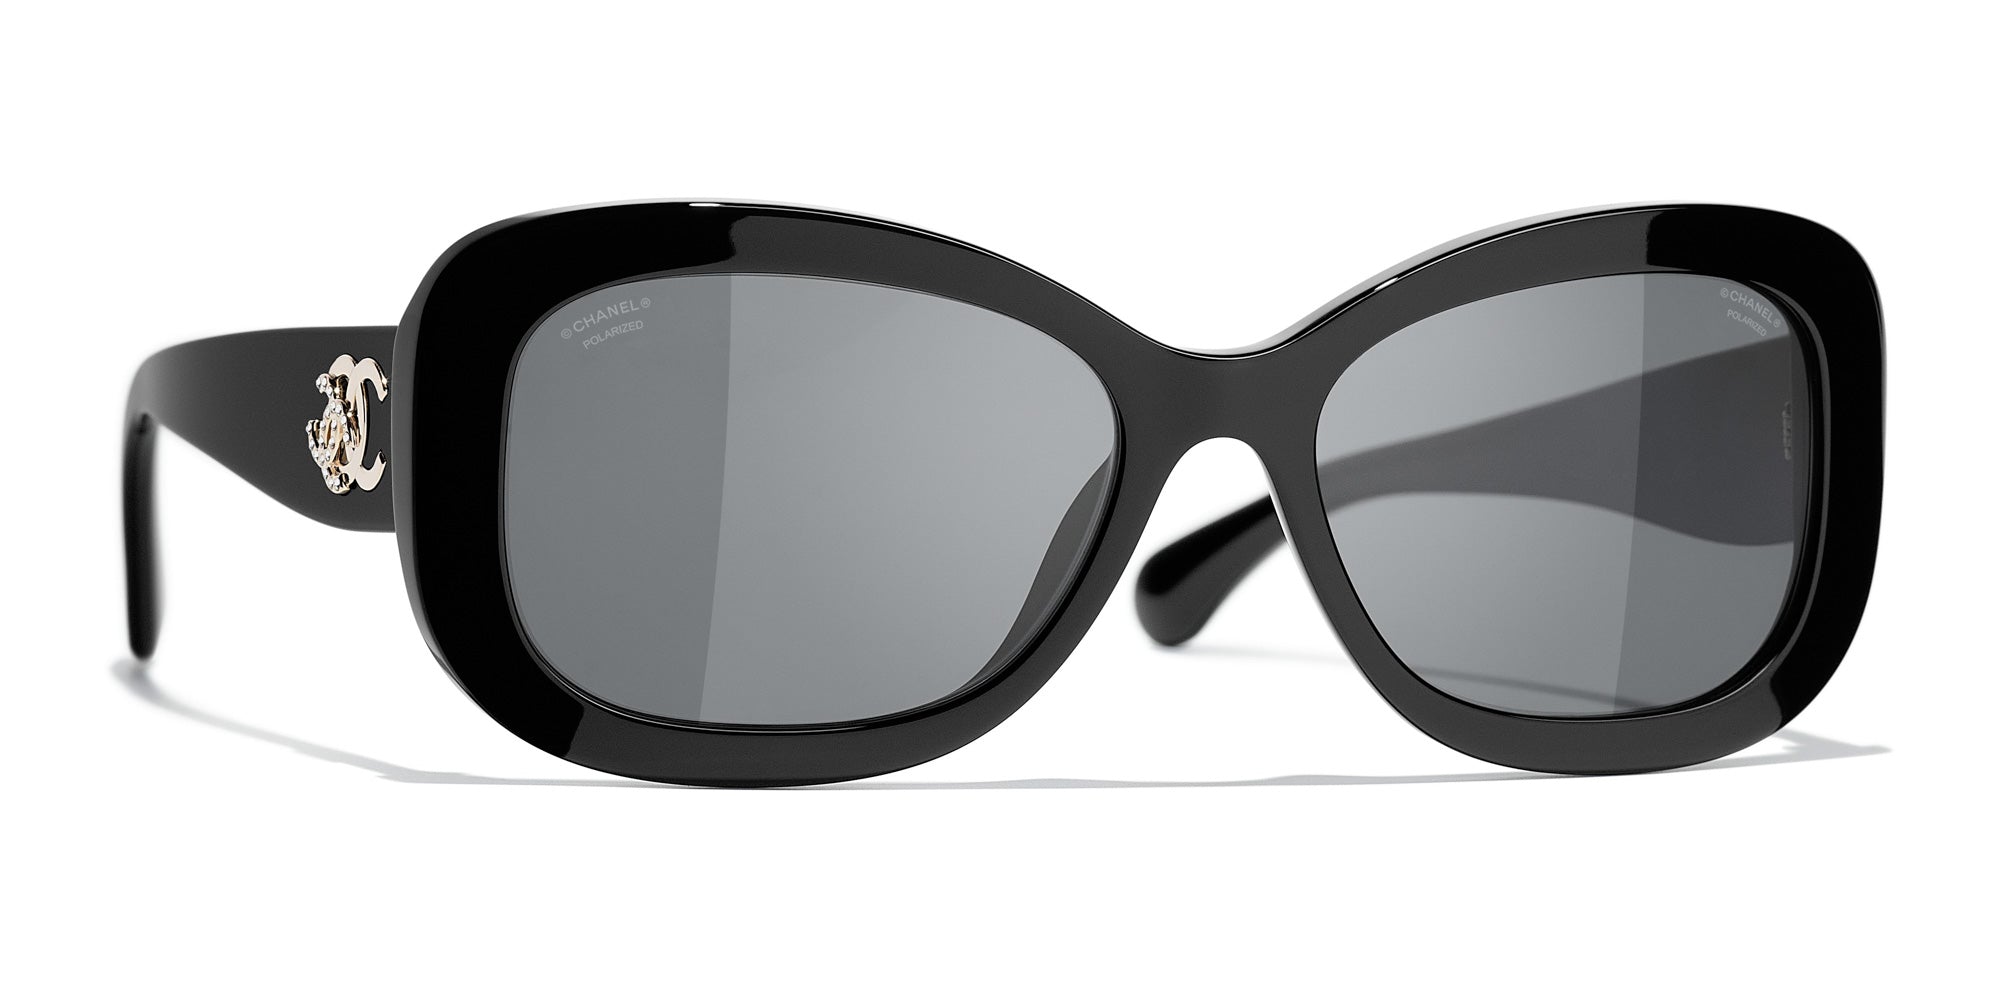 CHANEL sunglasses for women - Online shop